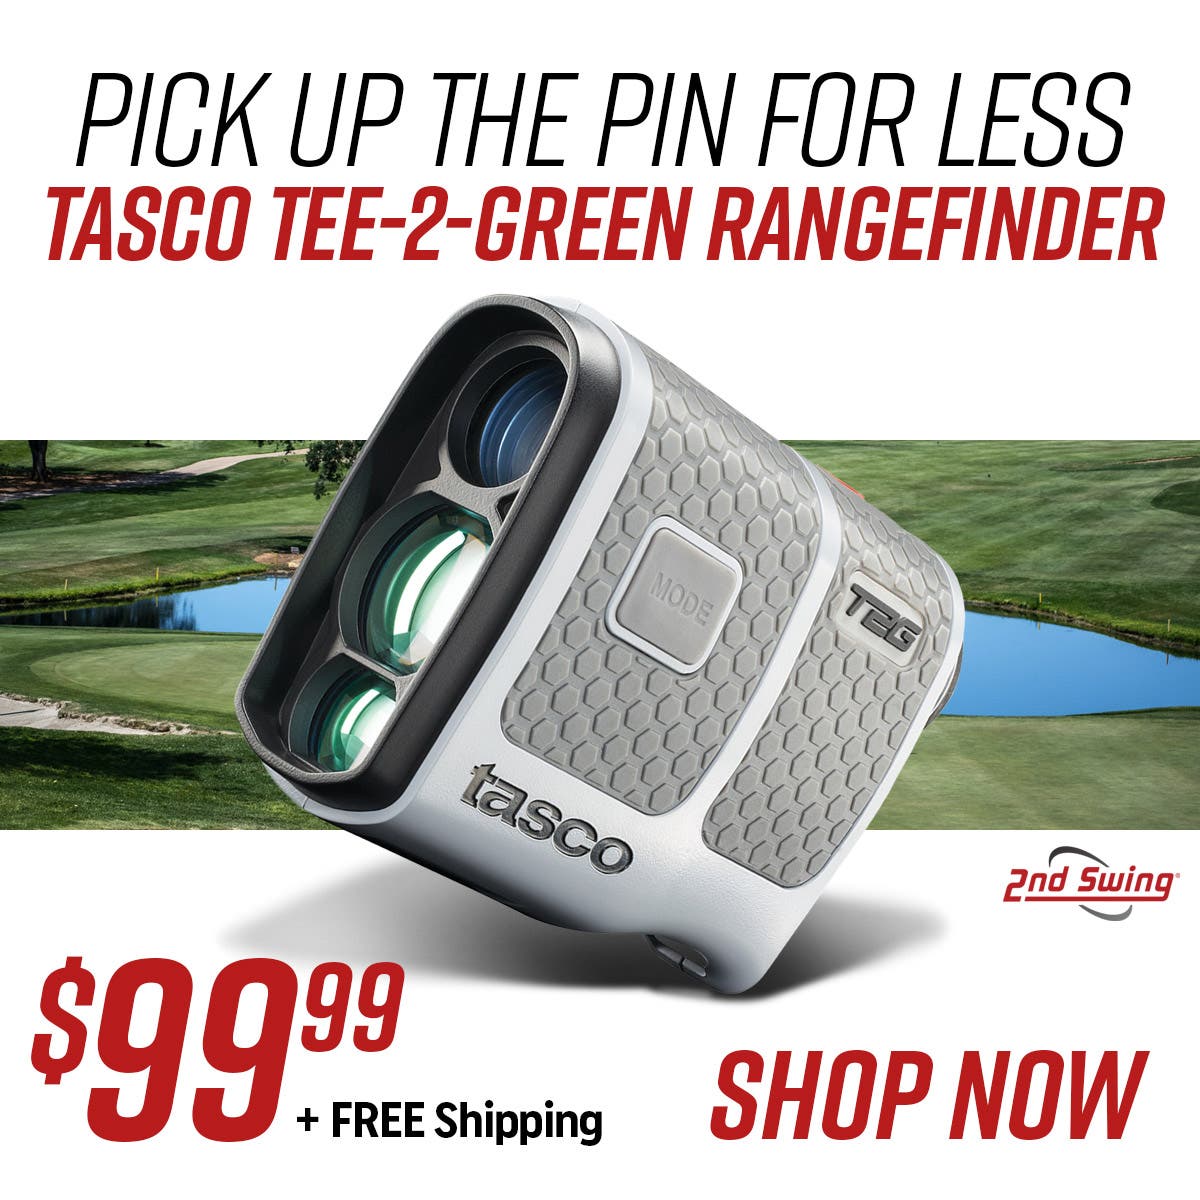 The Tasco Tee-2-Green Rangefinder